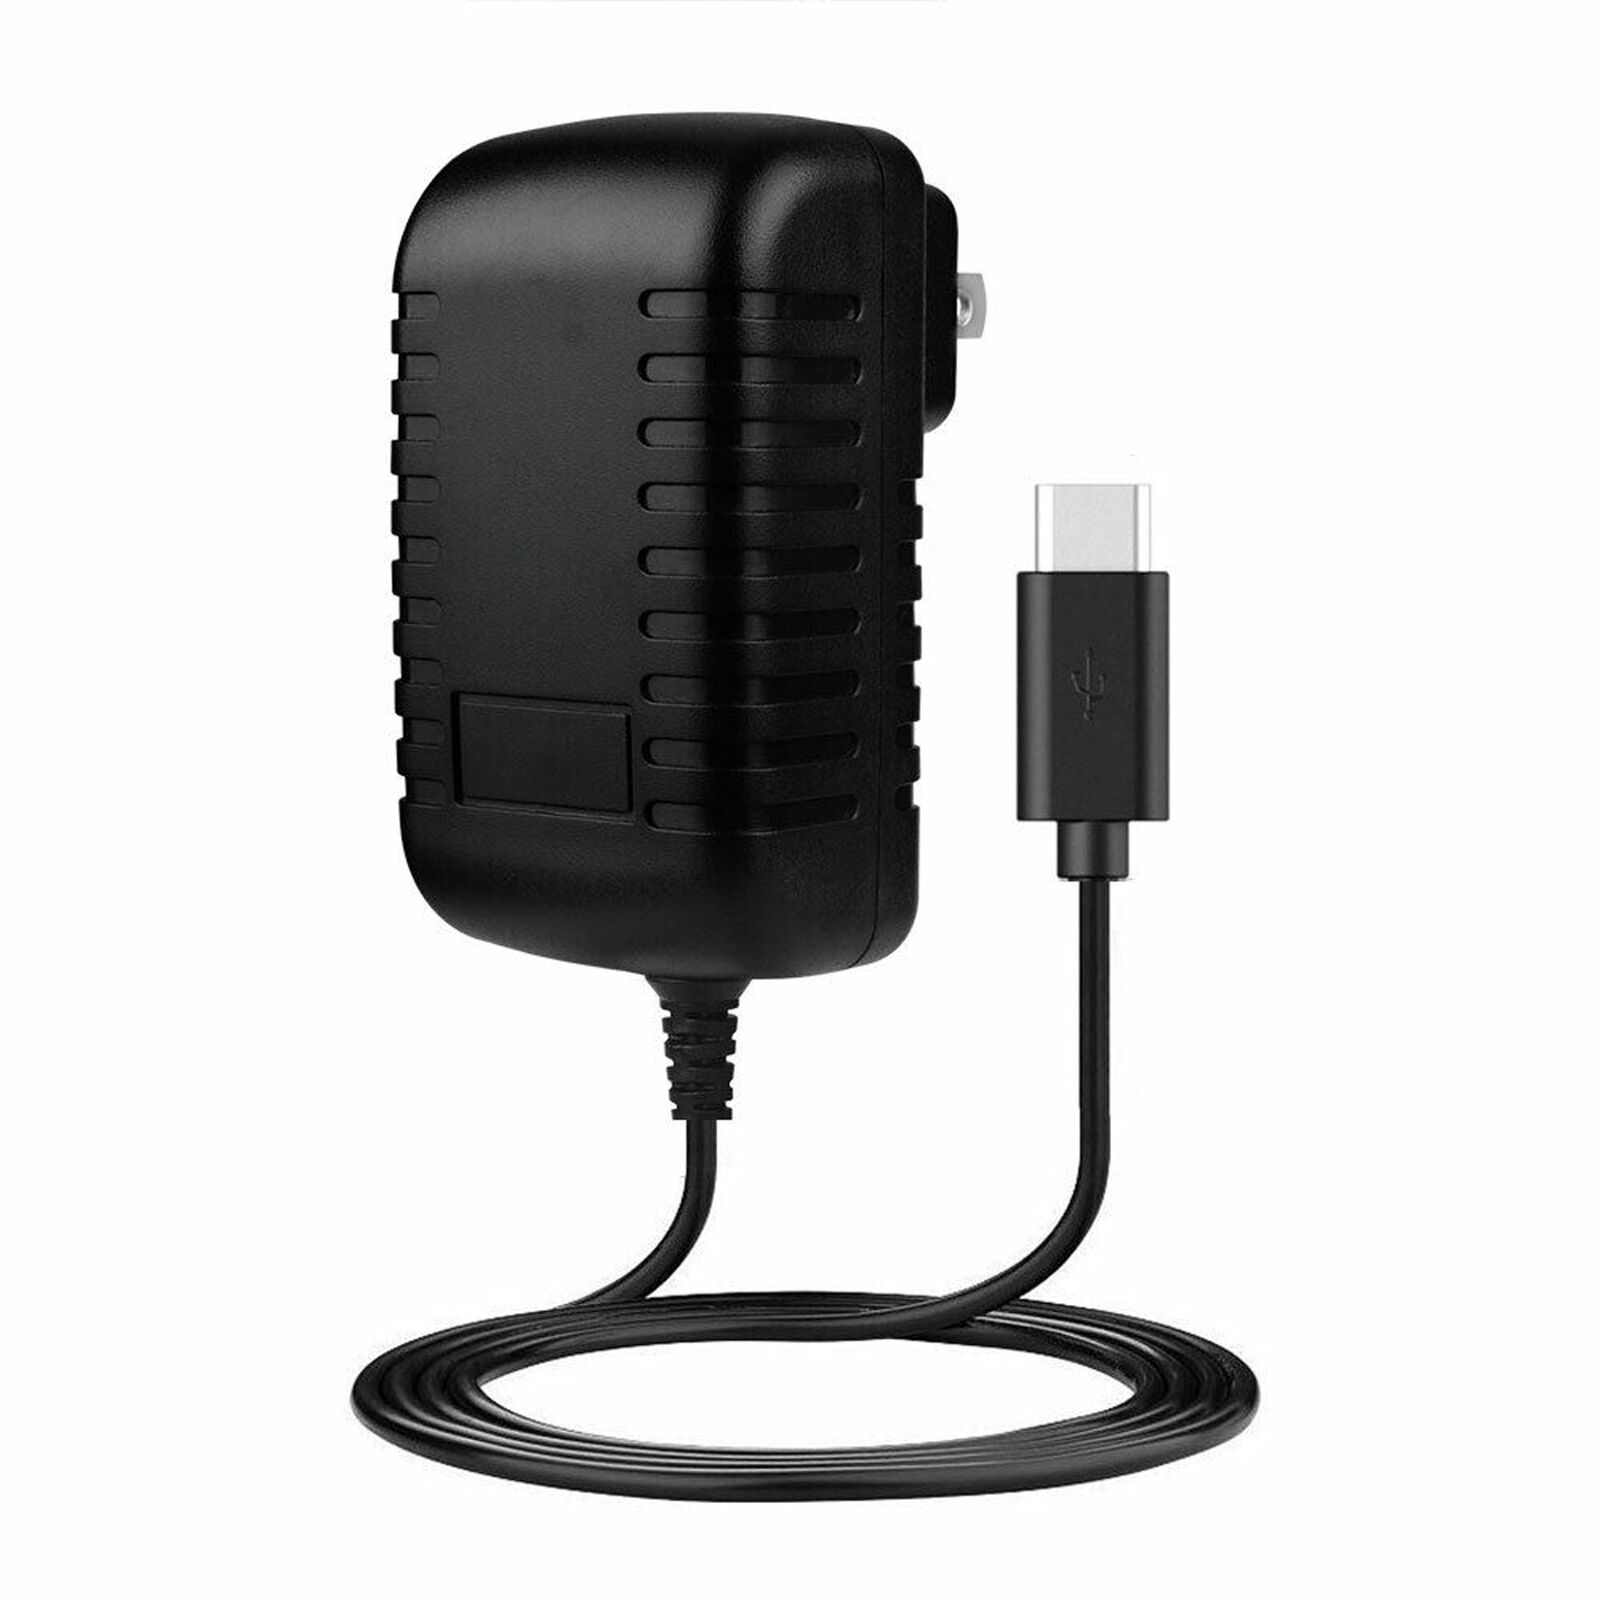 *Brand NEW*Pulseroll Ignite Mini PMG007 MG007 Heated Massage Gun AC Adapter USB Charger